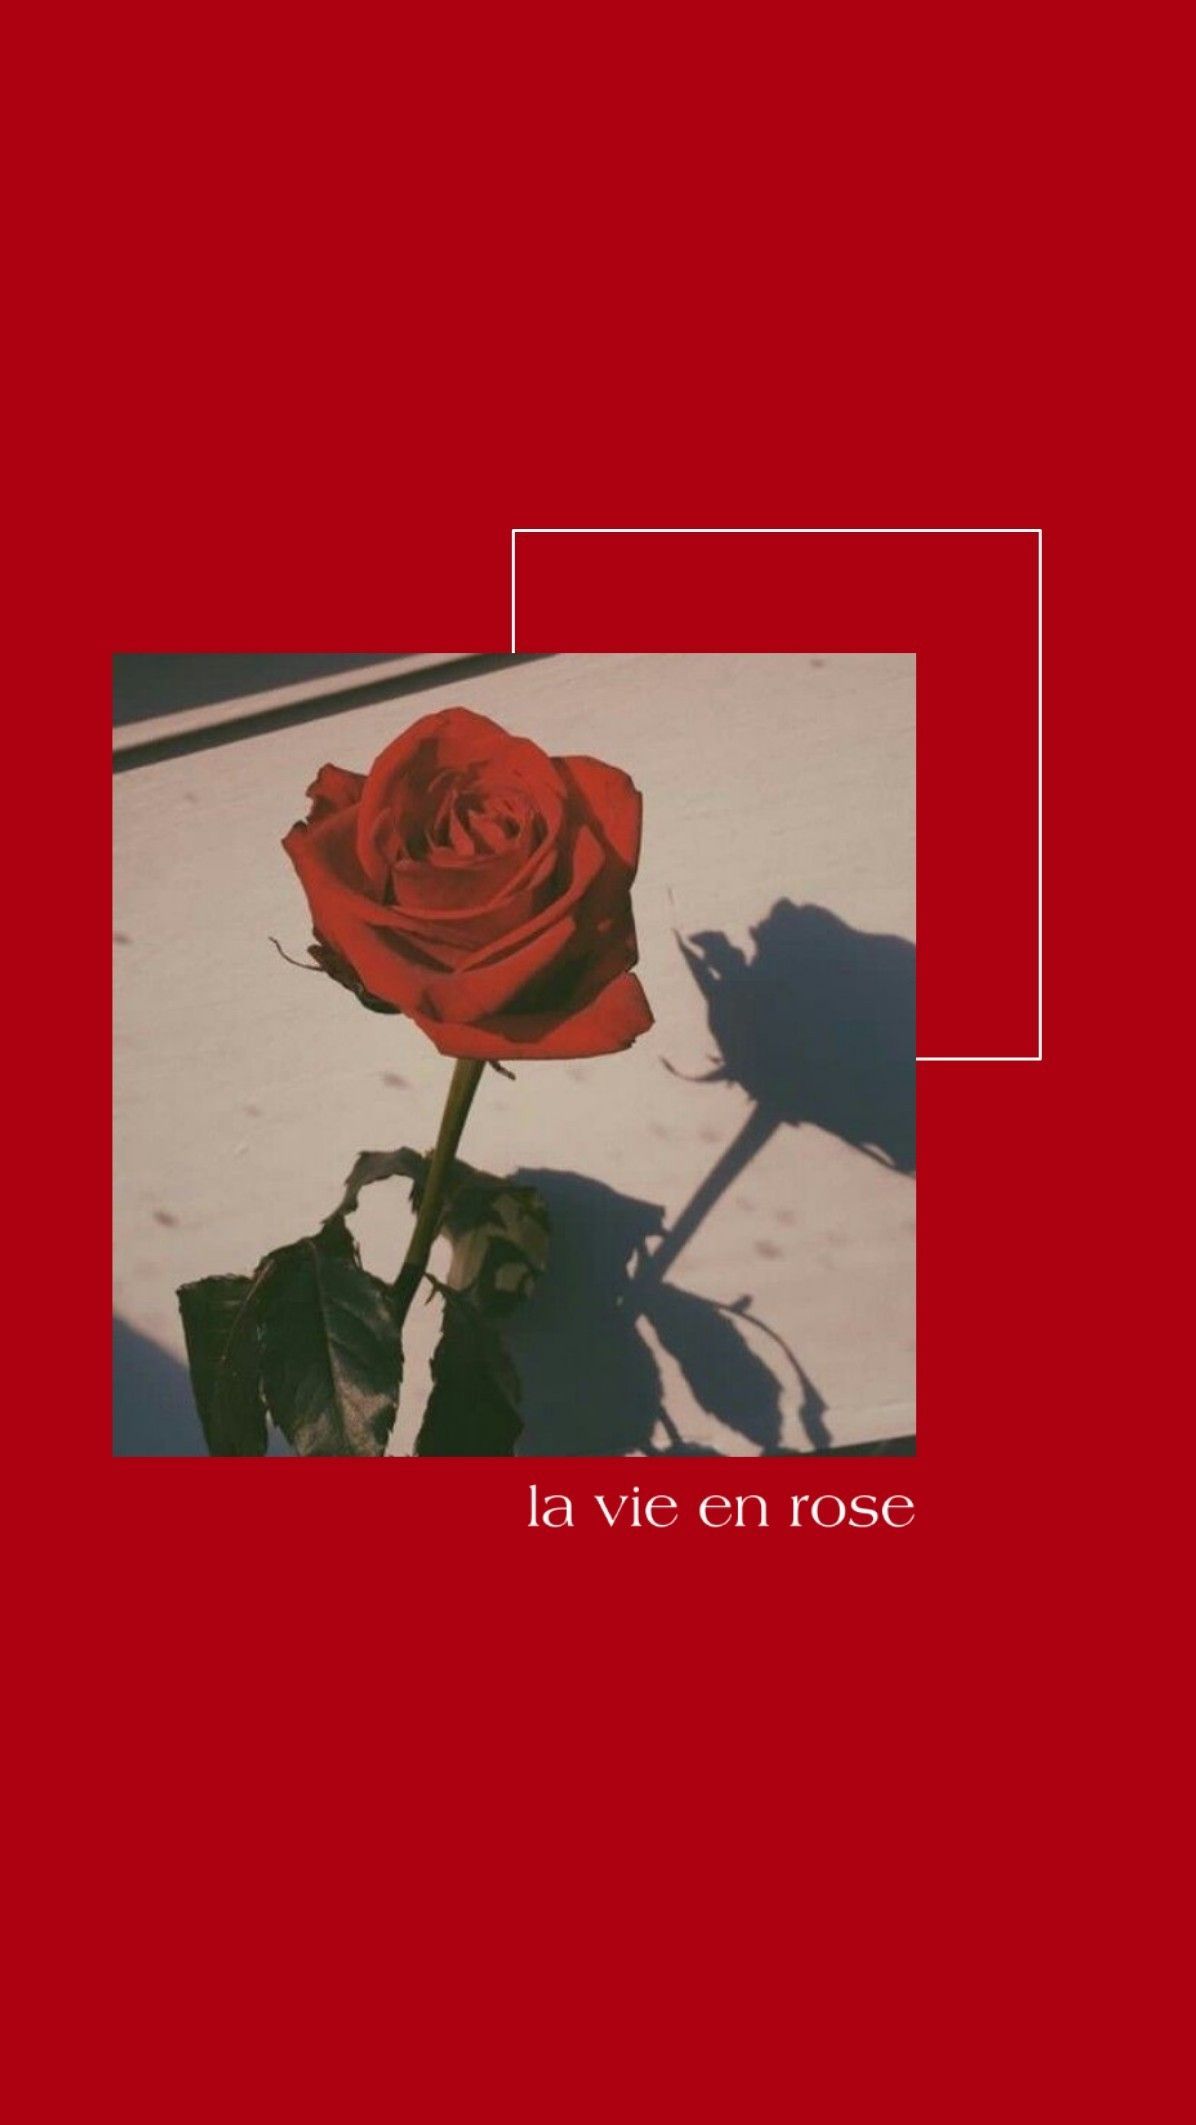 Red aesthetic wallpaper#aesthetic #red #wallpaper. Red roses wallpaper, Red aesthetic grunge, Aesthetic roses